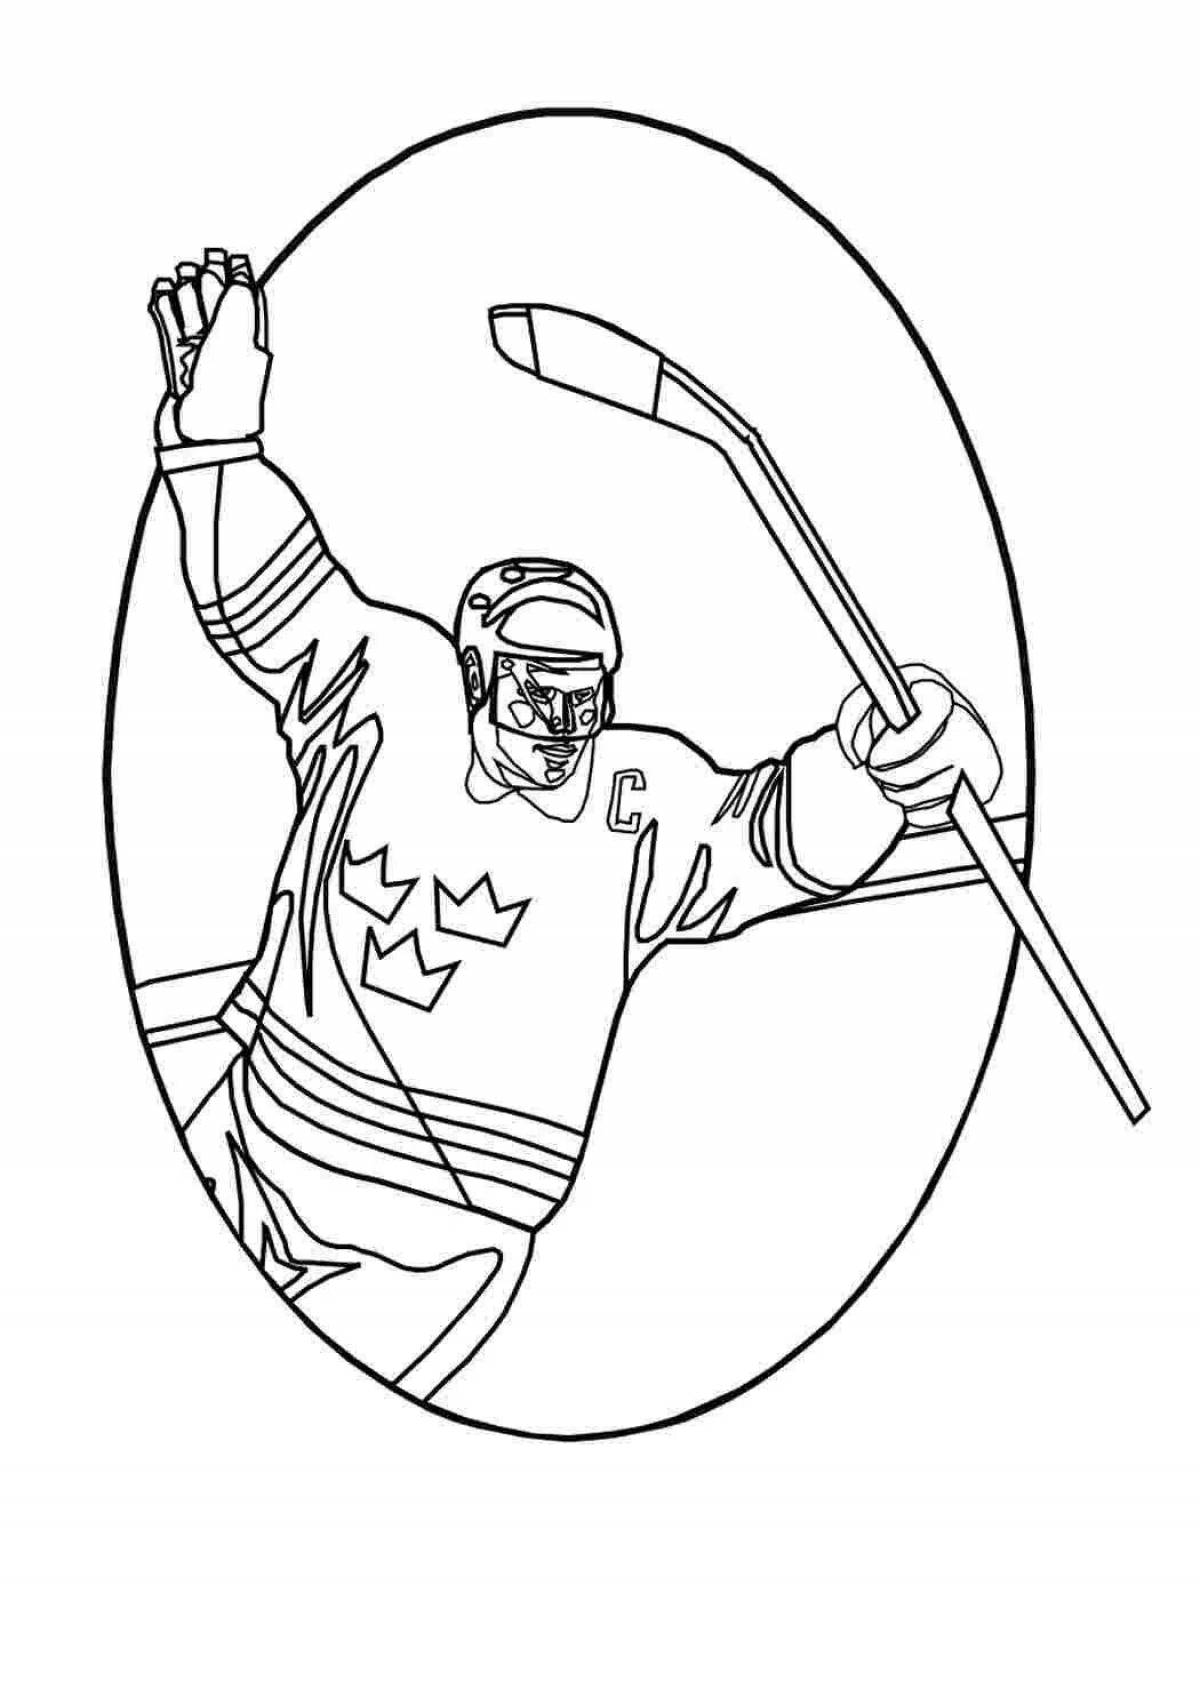 Coloring page joyful hockey nhl